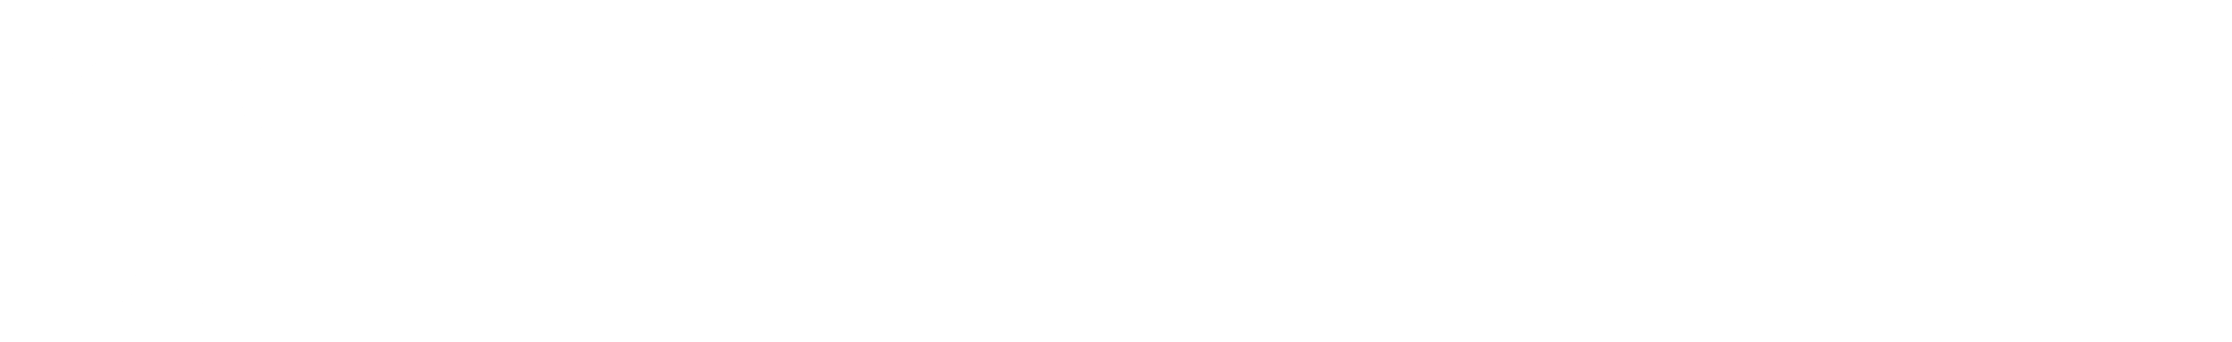 t-mobile-1-logo-black-and-white